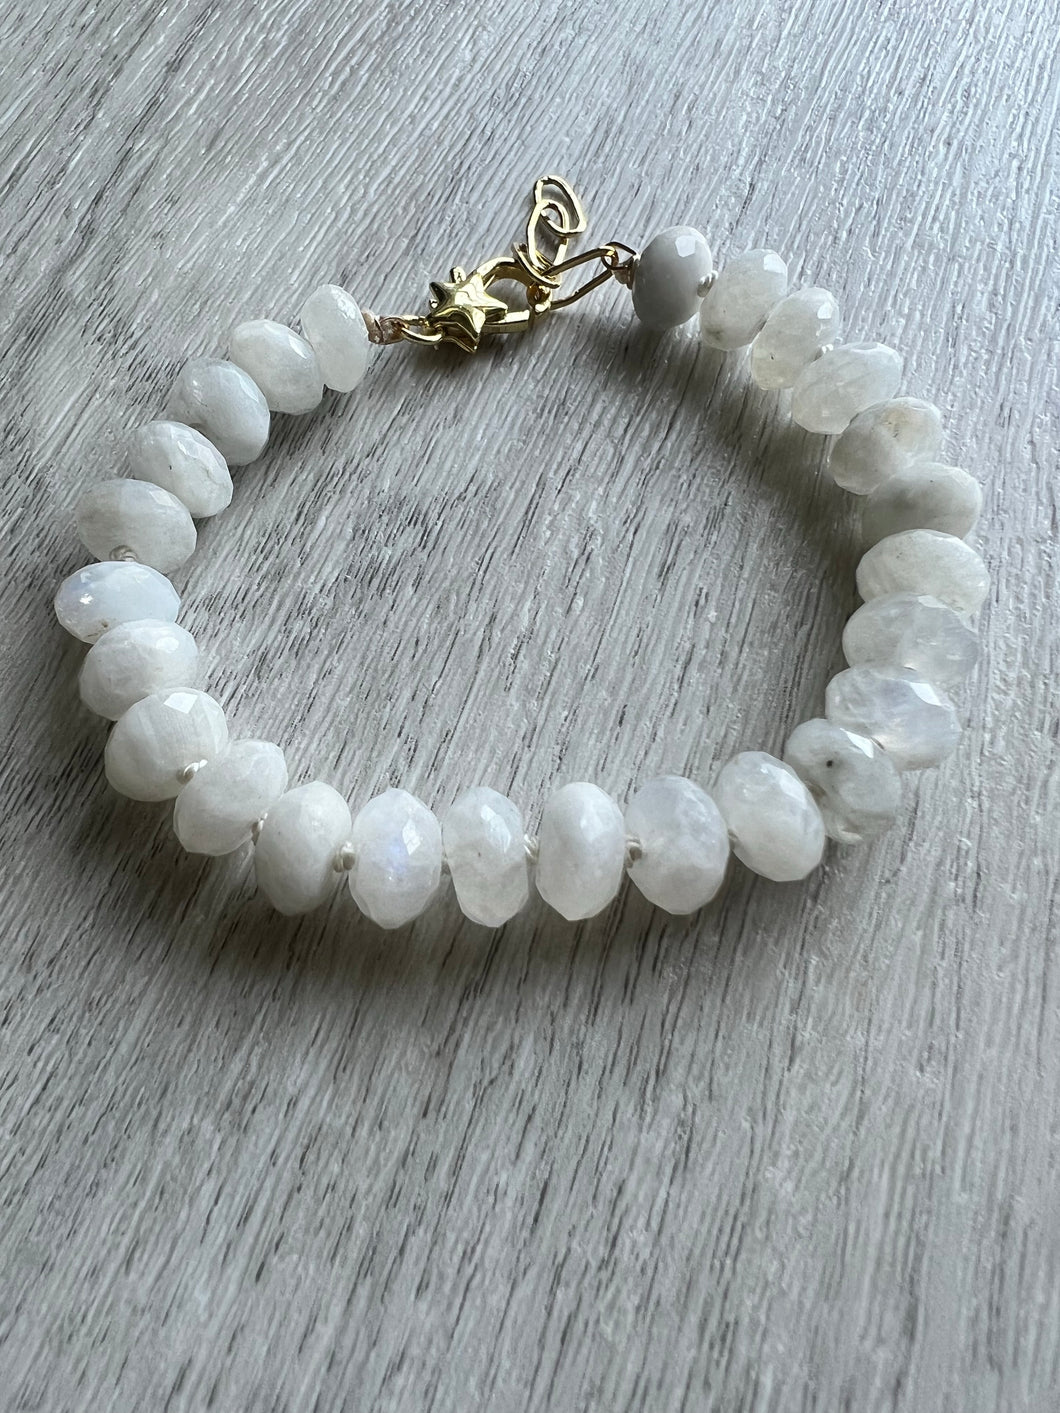 Moonstone knotted bracelet